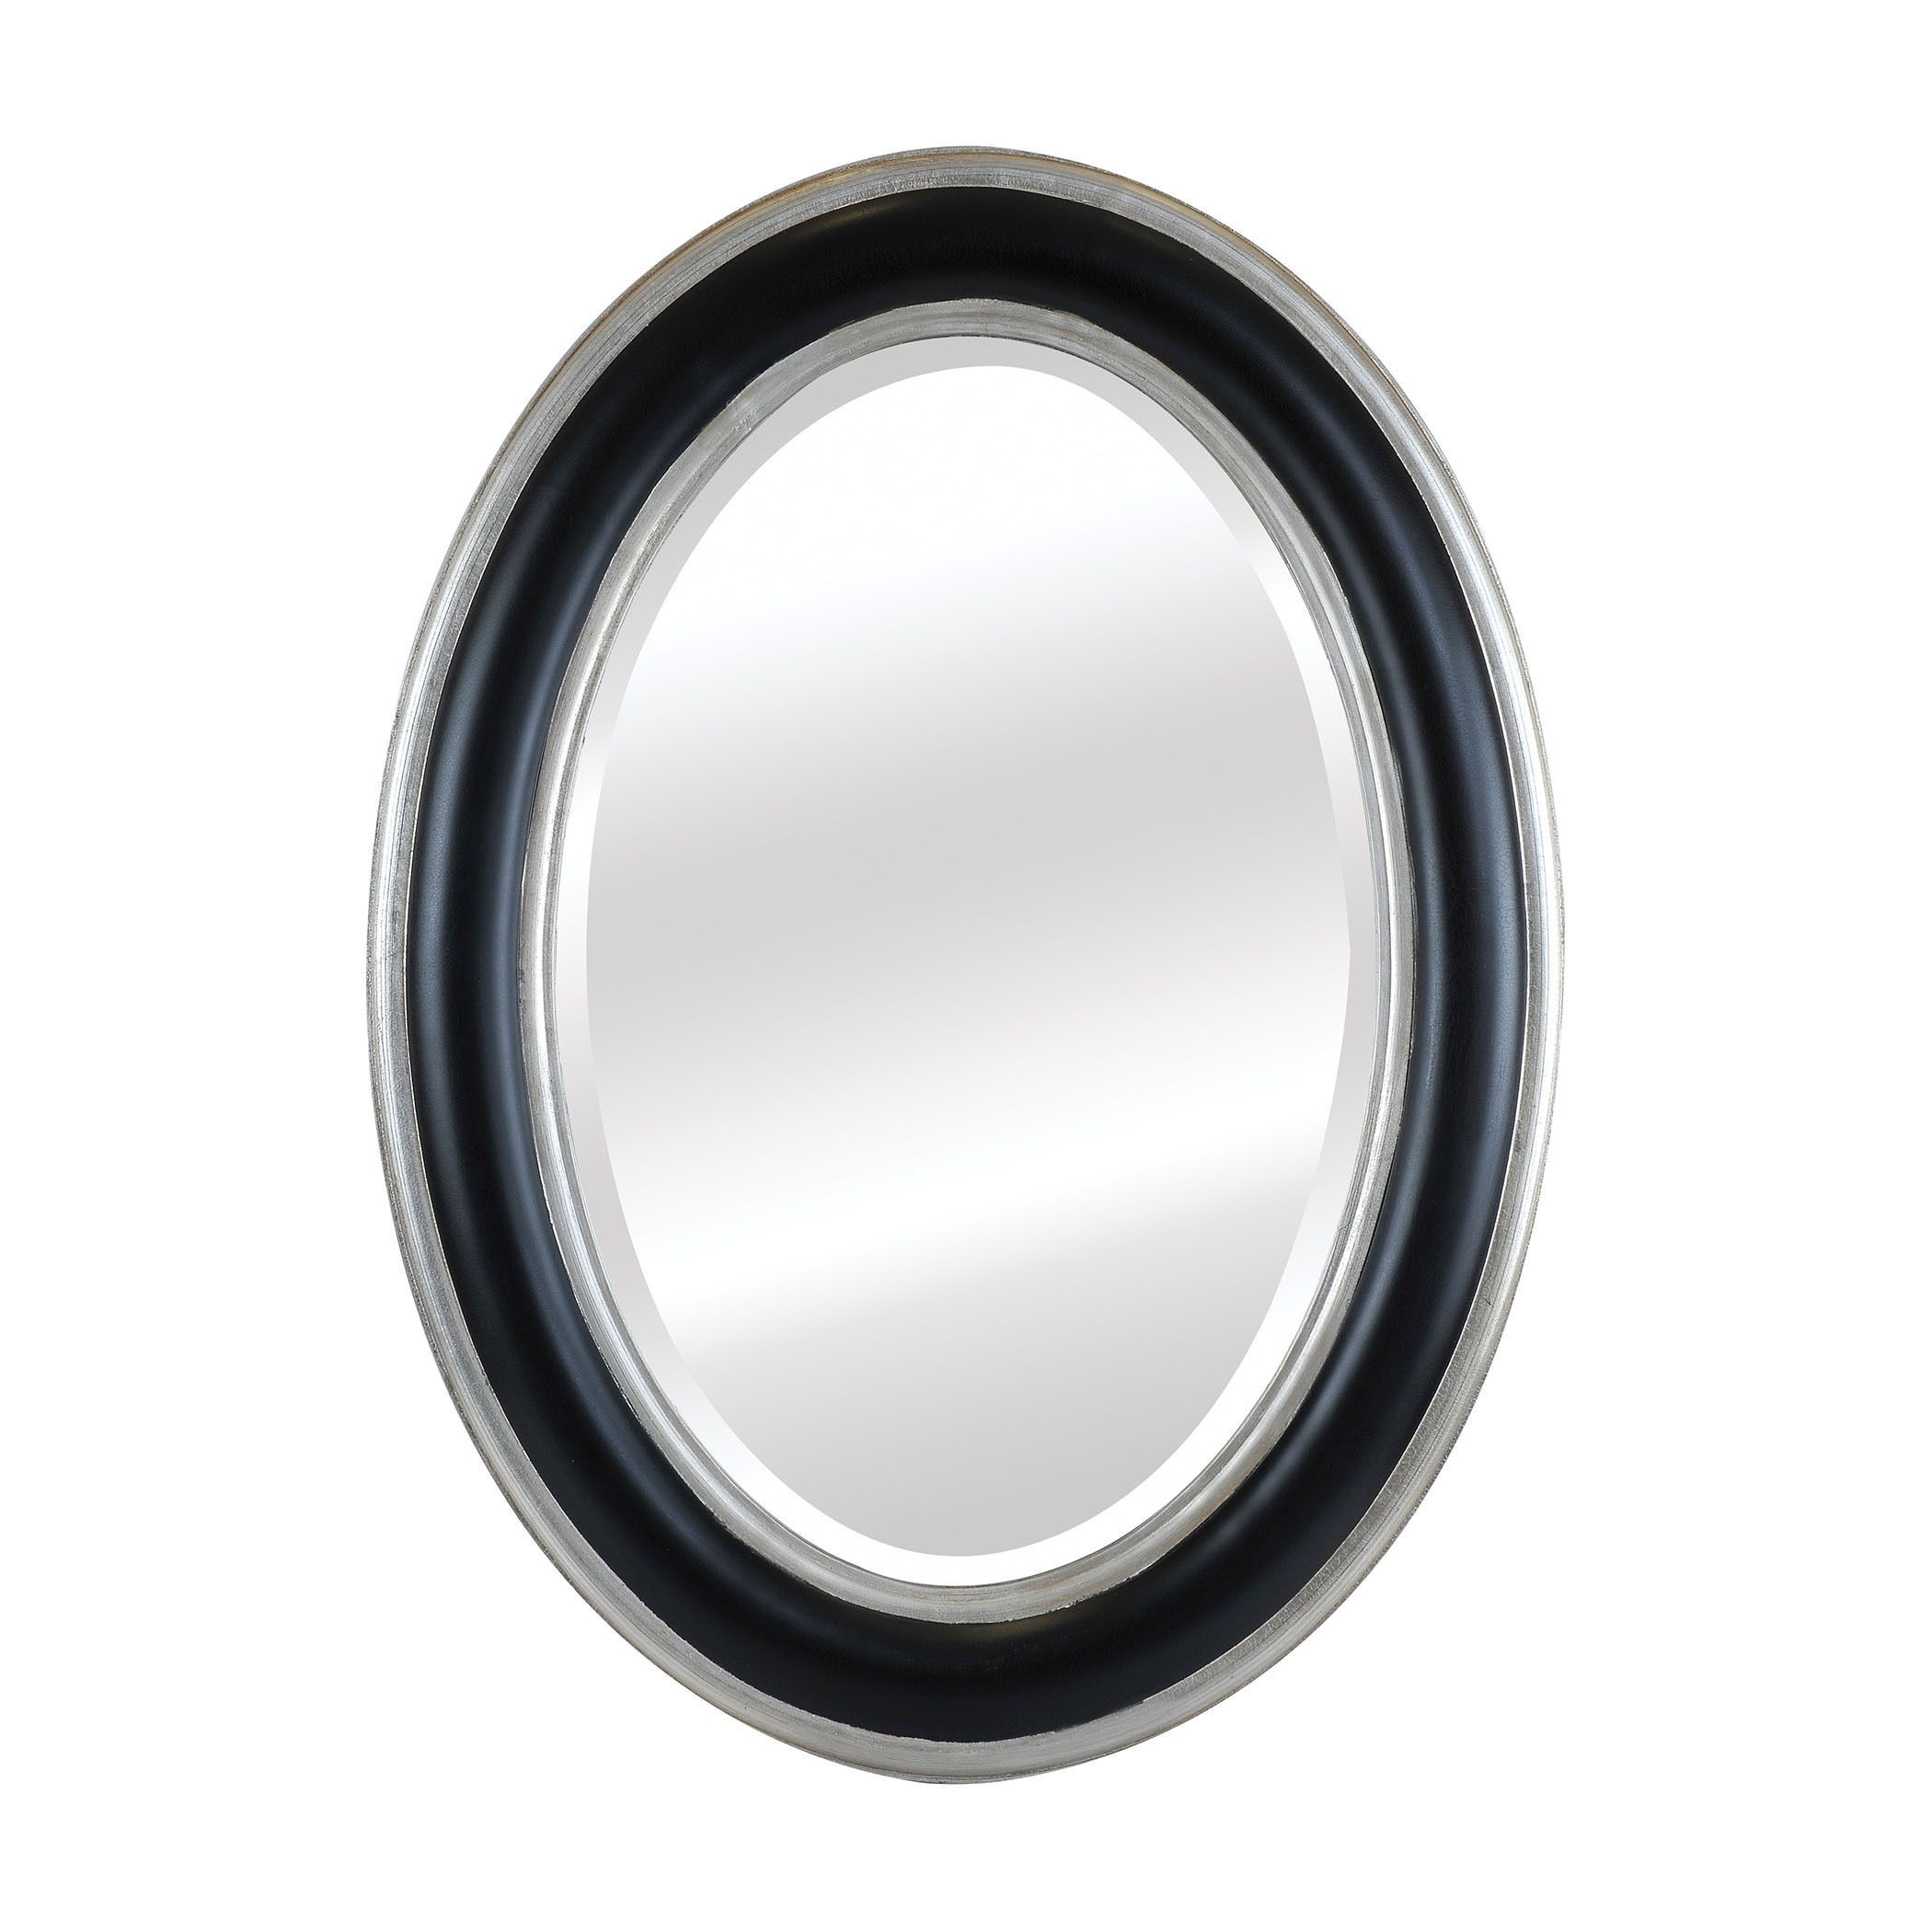 Clyburn Oval Black Mirror Antique Silver Matte Black Products Pertaining To Oval Black Mirror (View 14 of 15)